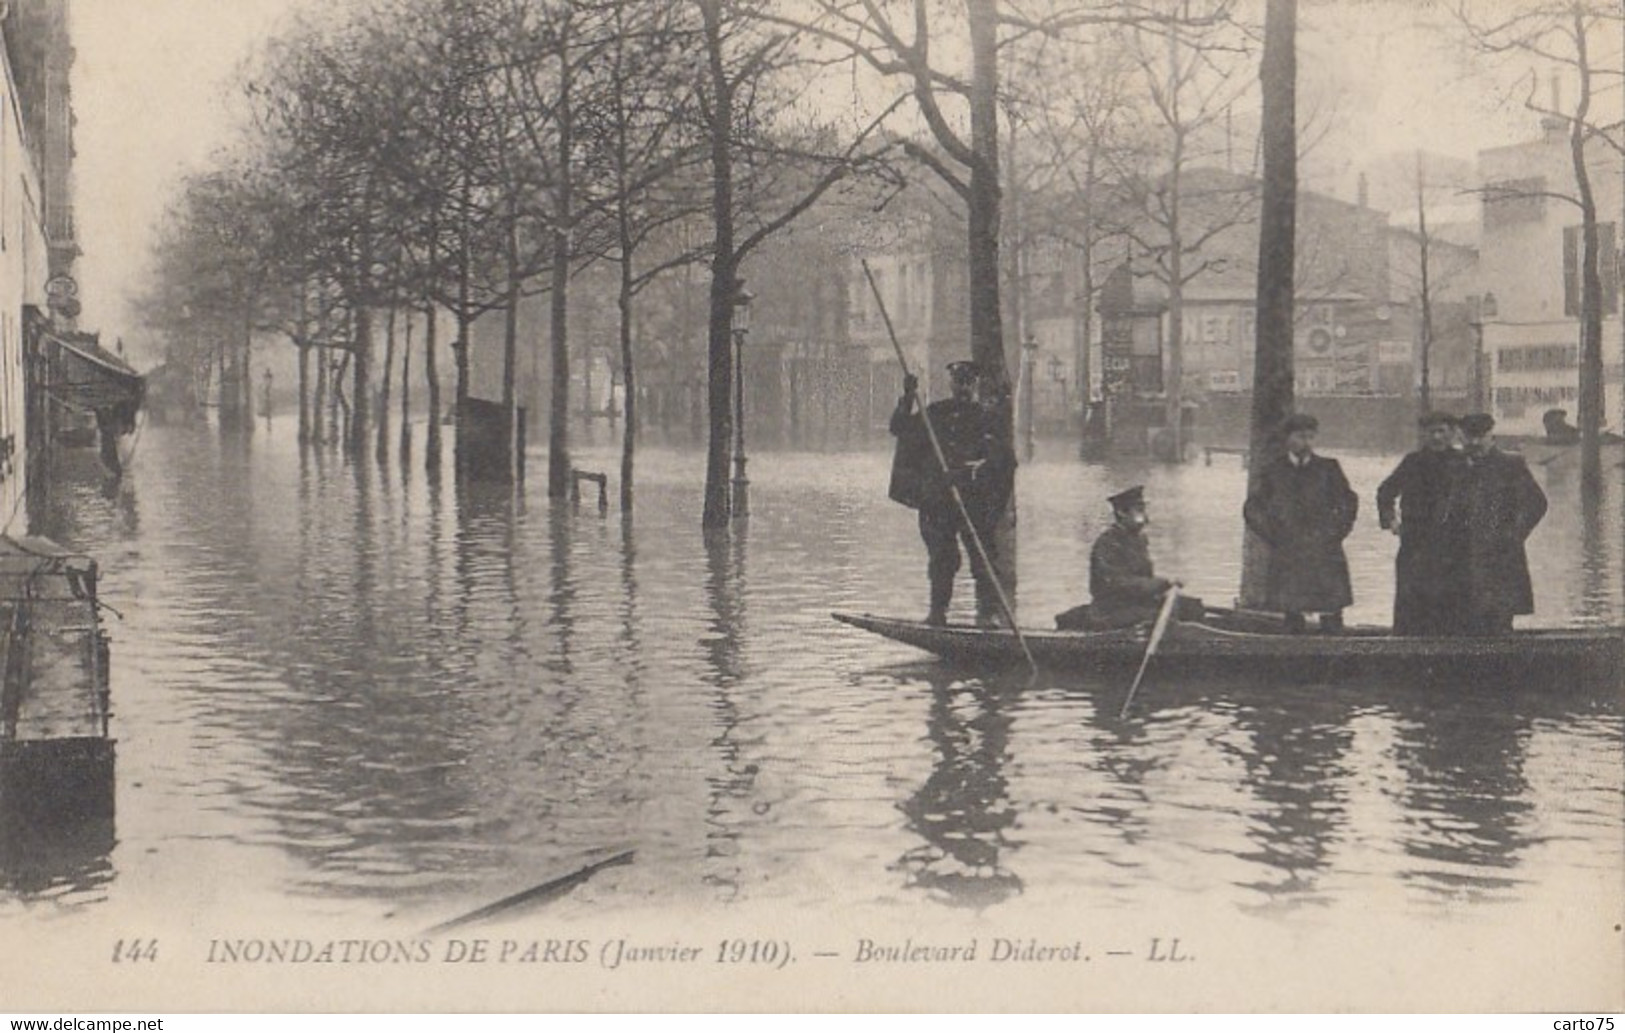 Evènements - Inondations - Paris Janvier 1910 - Boulevard Diderot - Inondations